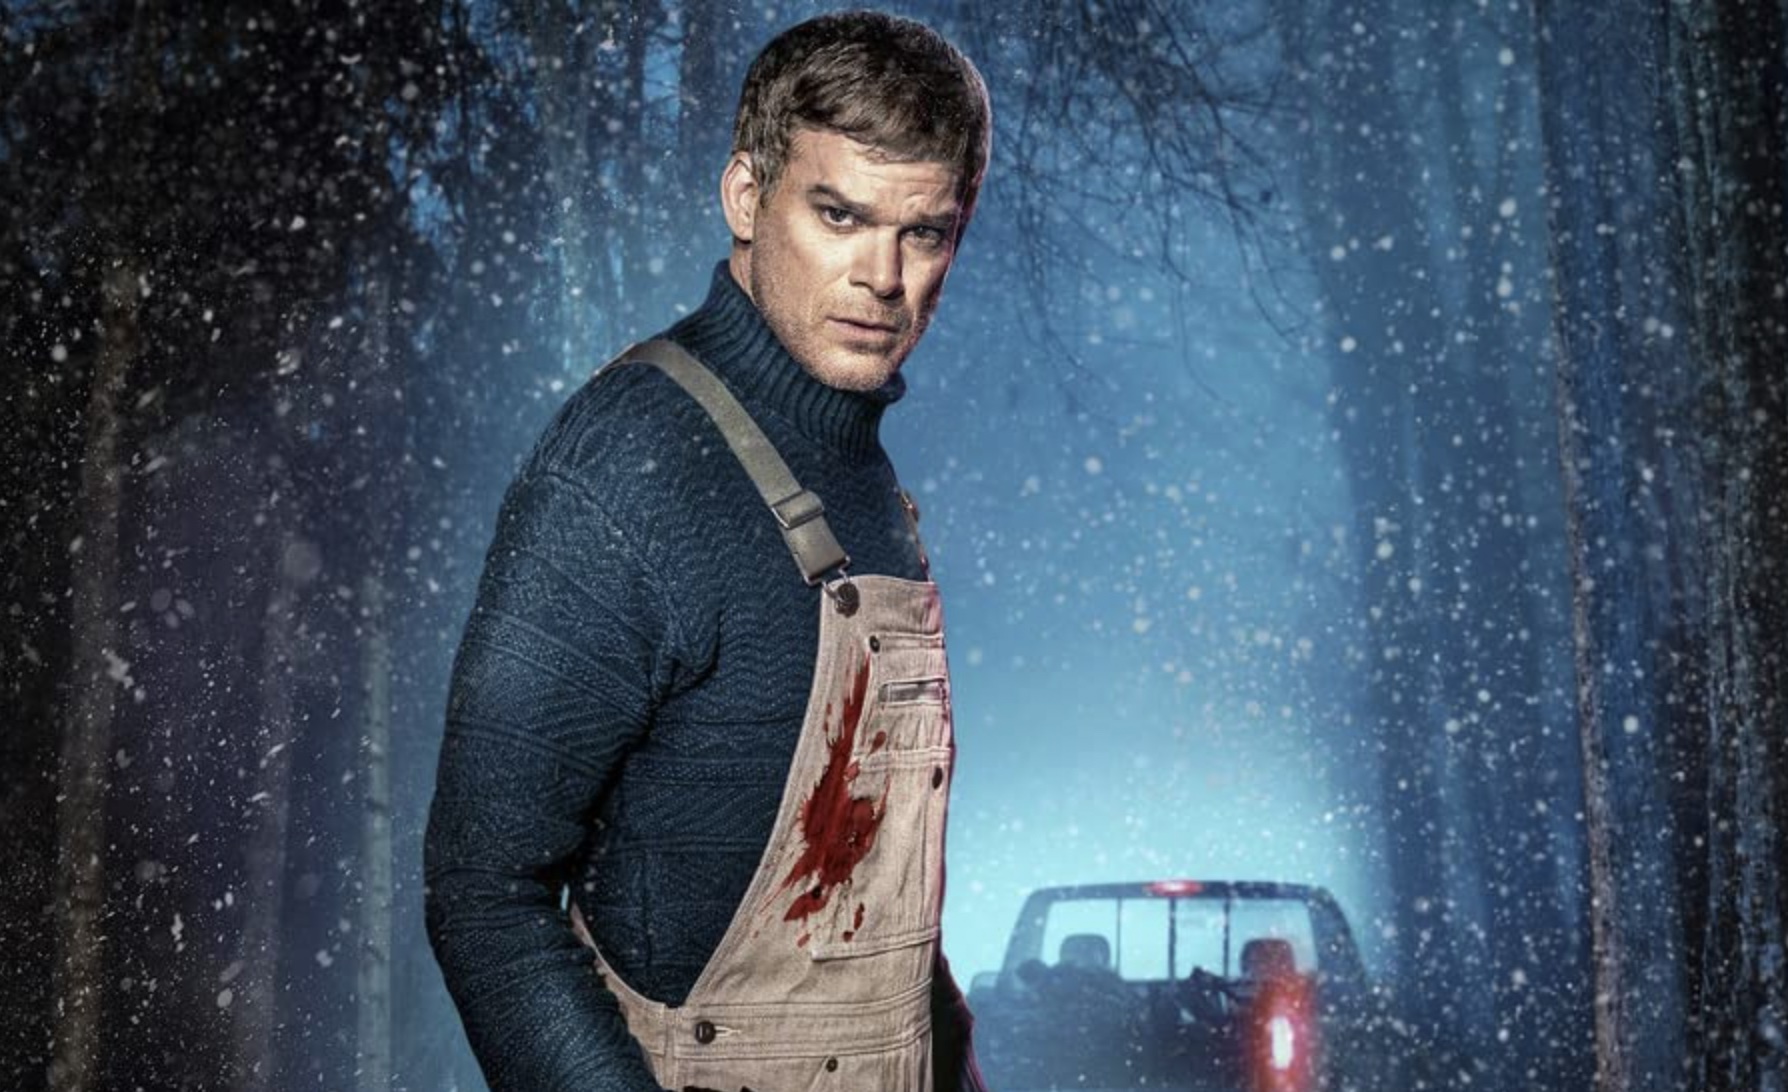 Dexter: New Blood Season 1 Streaming: Watch & Stream Online via